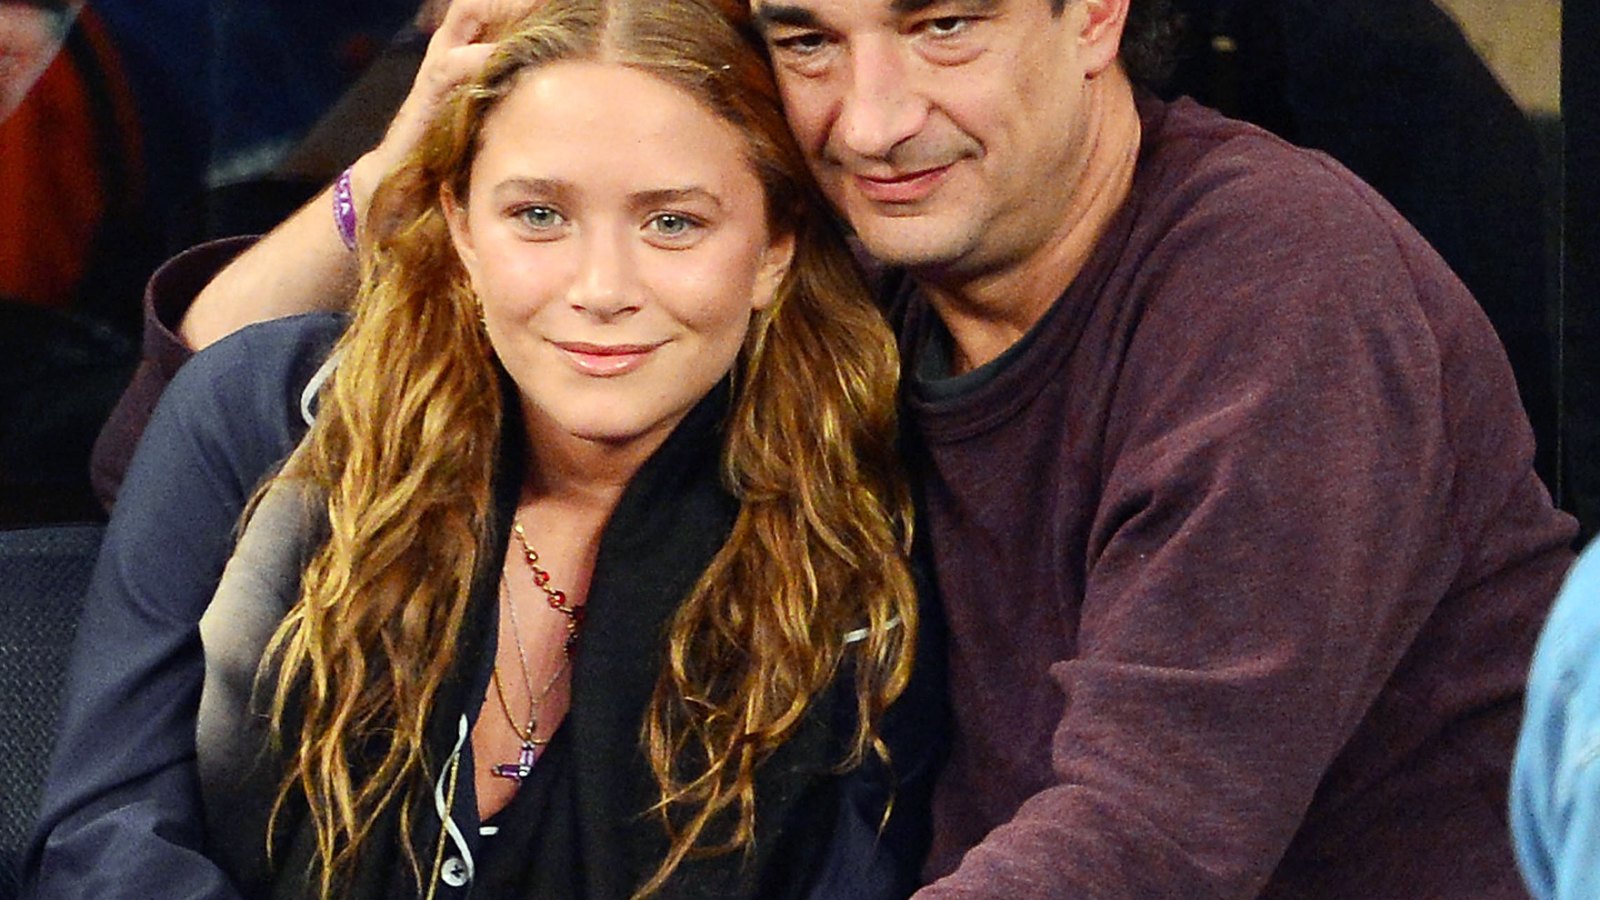 Mary-Kate Olsen and Olivier Sarkozy on November 9, 2012 in New York